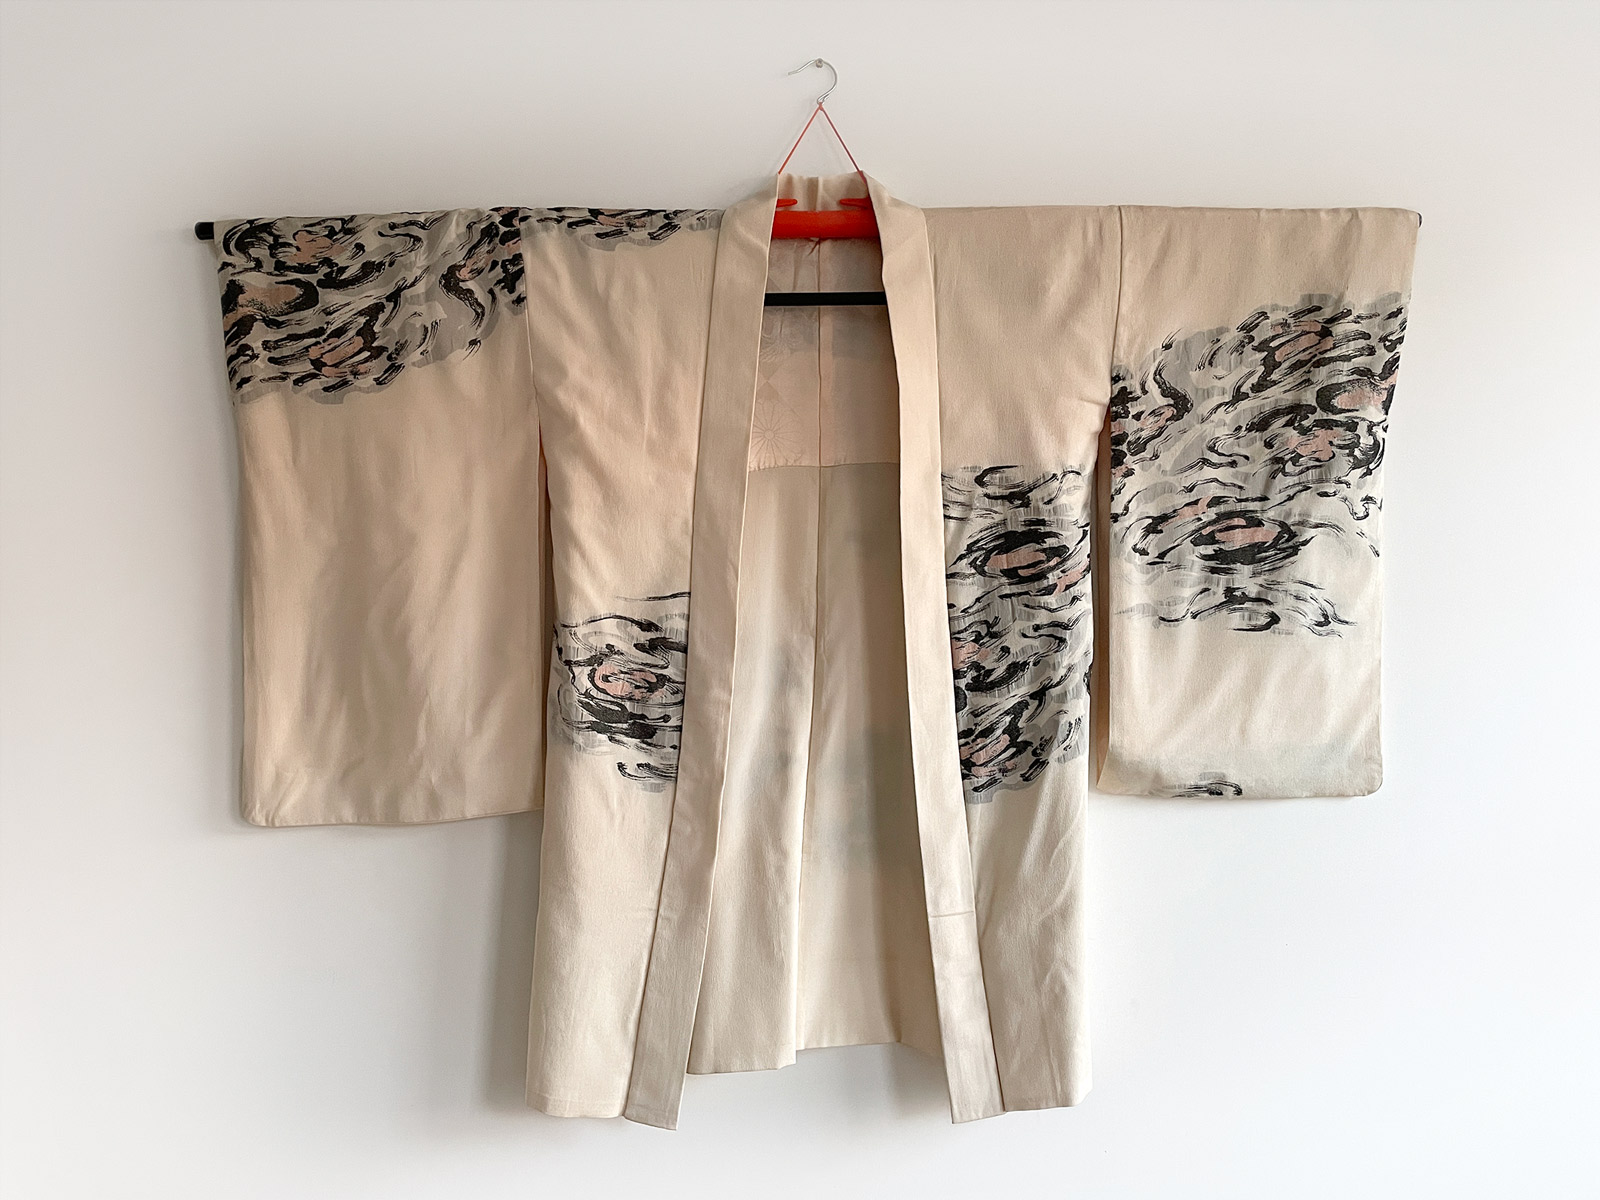 Mitsu – vintage Kimono jacket with artistic design